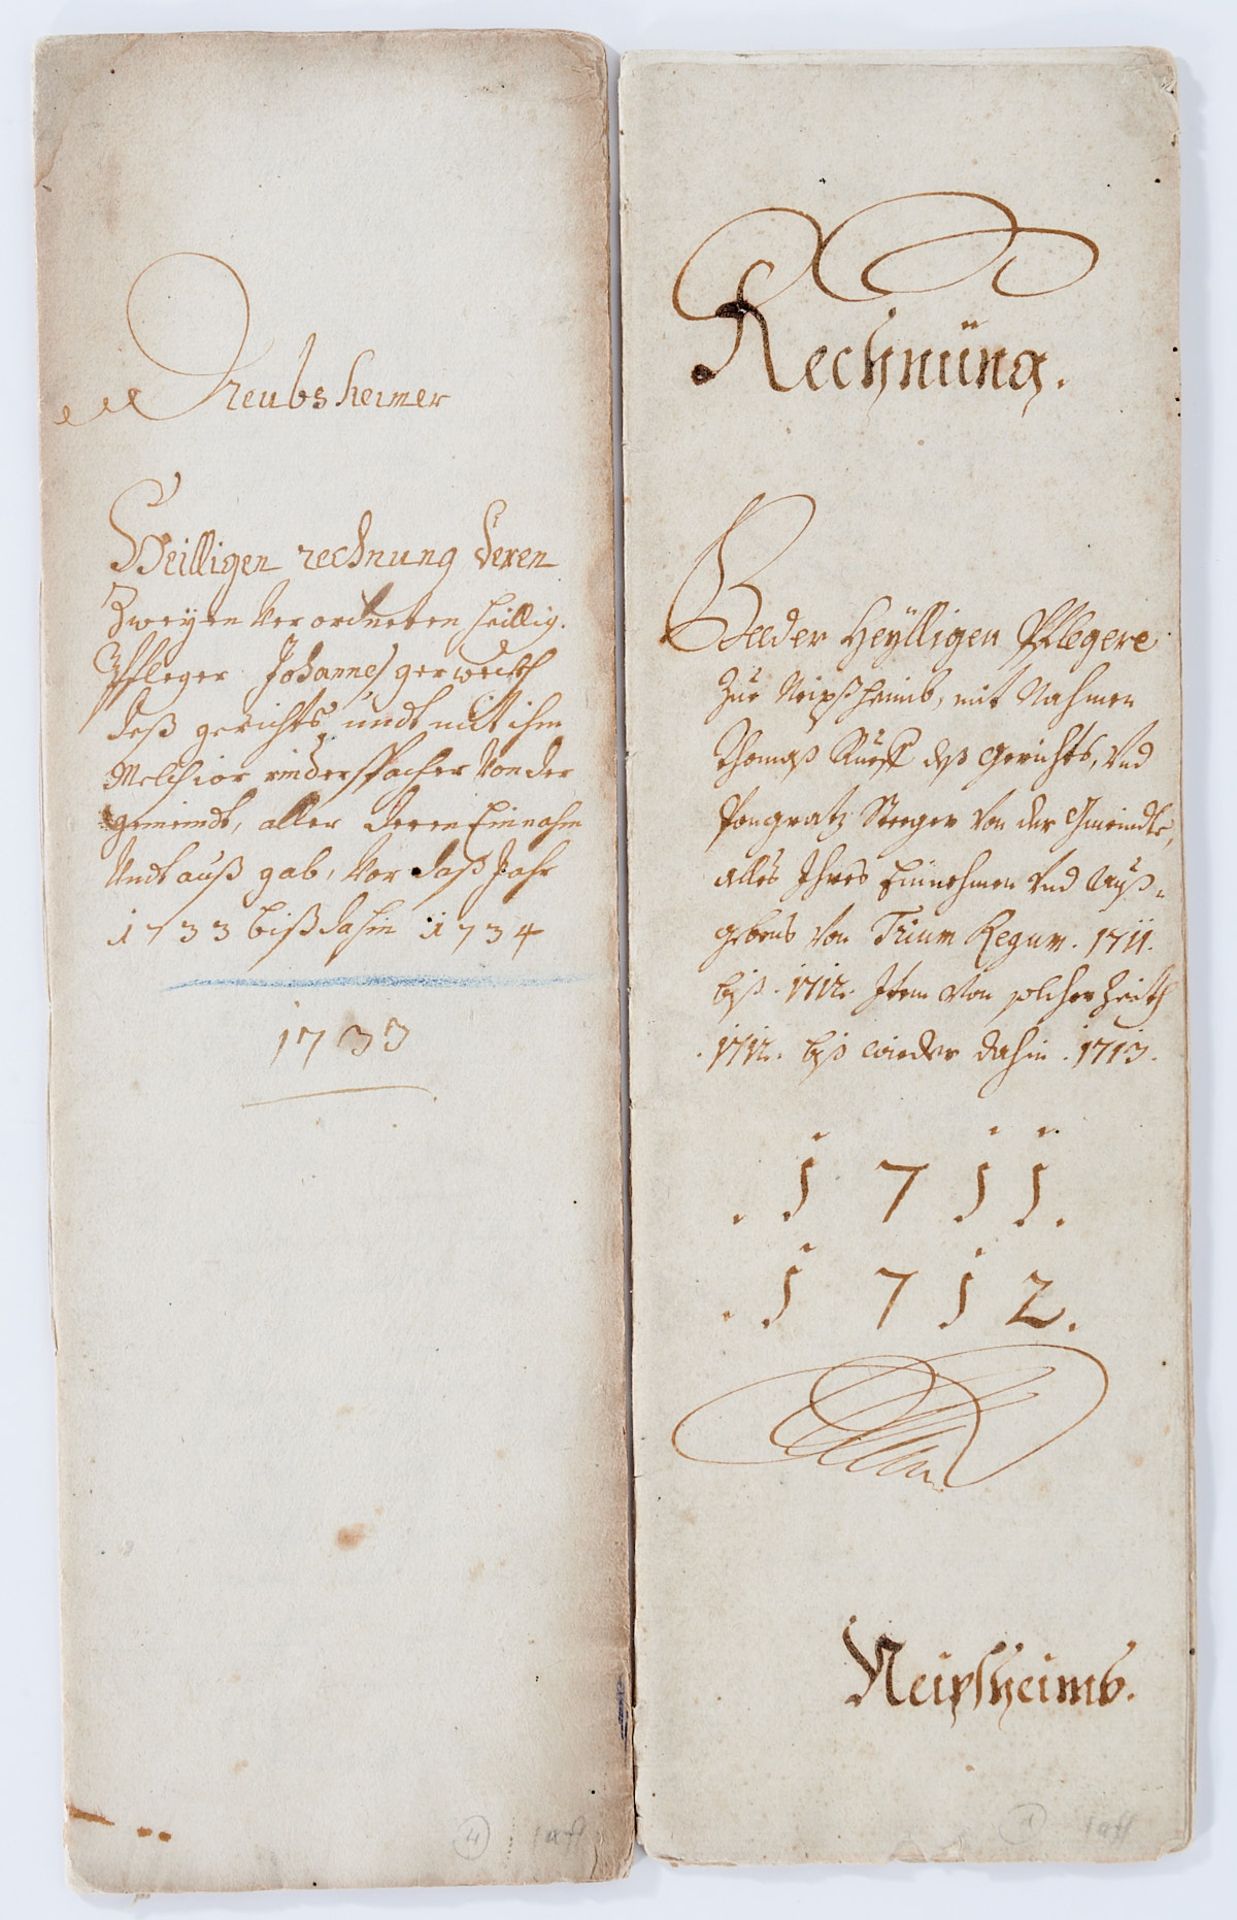 Neibsheim Heiligenrechungen - 3 Handschriften auf Papier. - Image 2 of 2